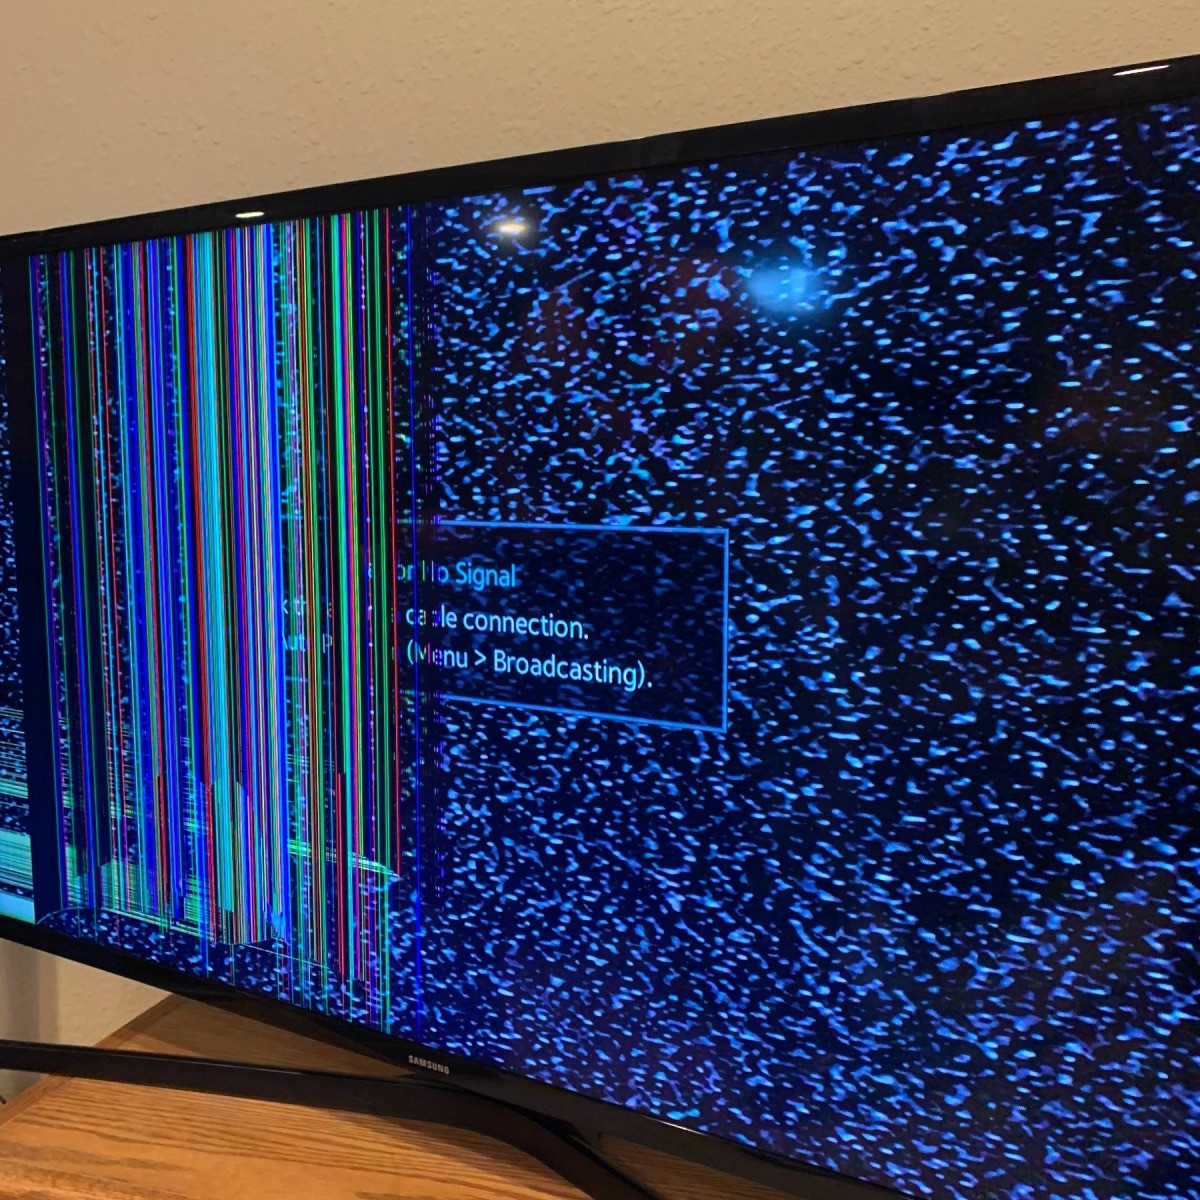 Smart TV Damaged Screen View?